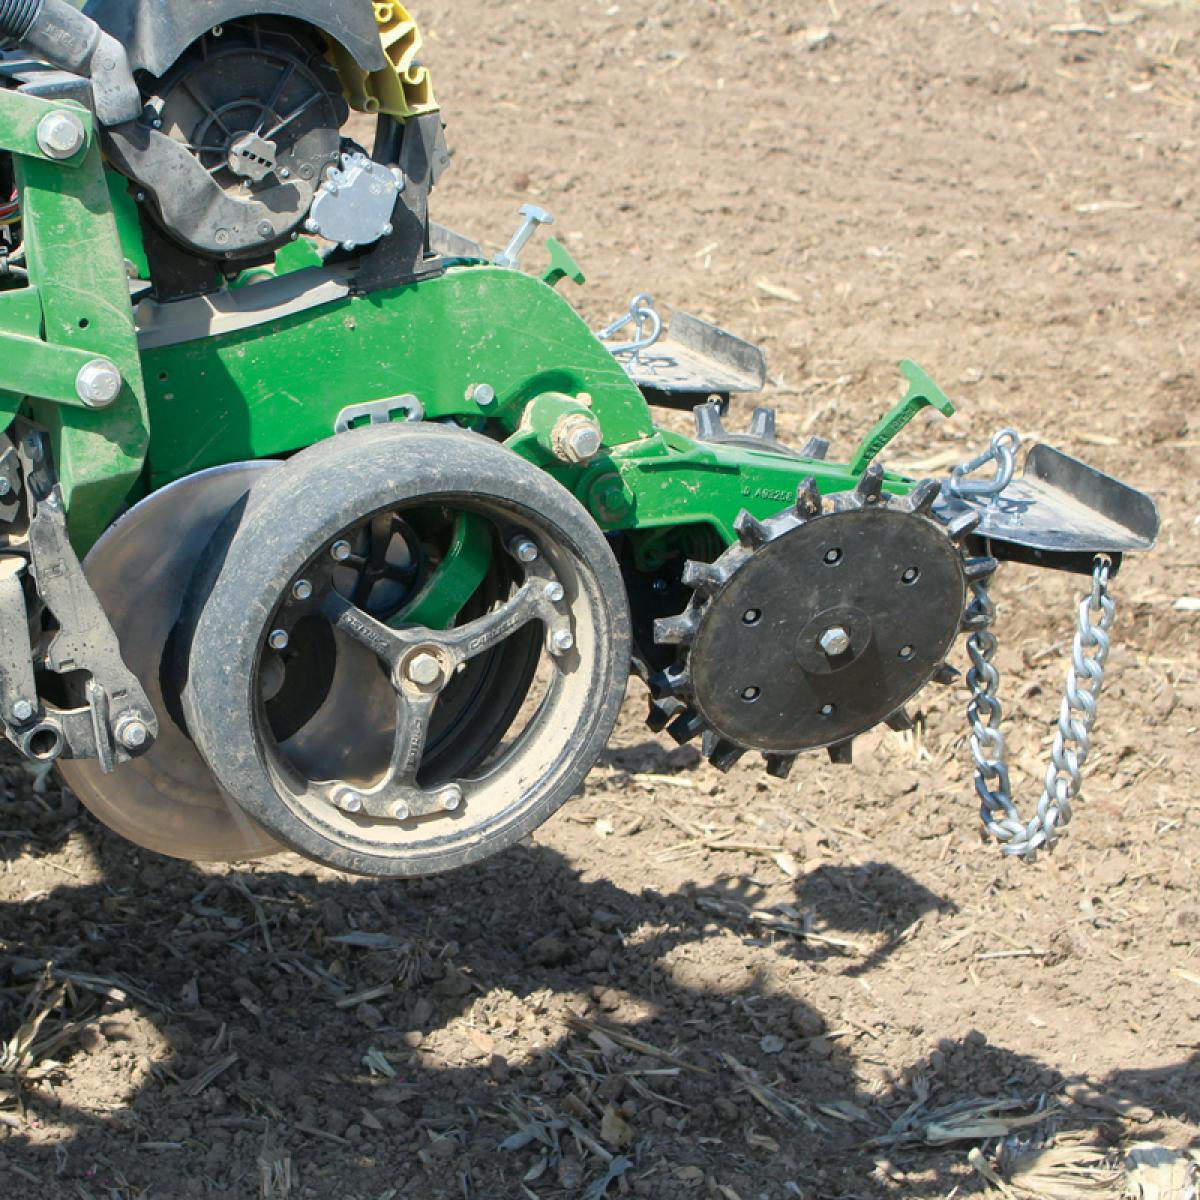 Drag Chain, Twister Closing Wheel, and Spoke Planter Gauge Wheel installed on John Deere planter